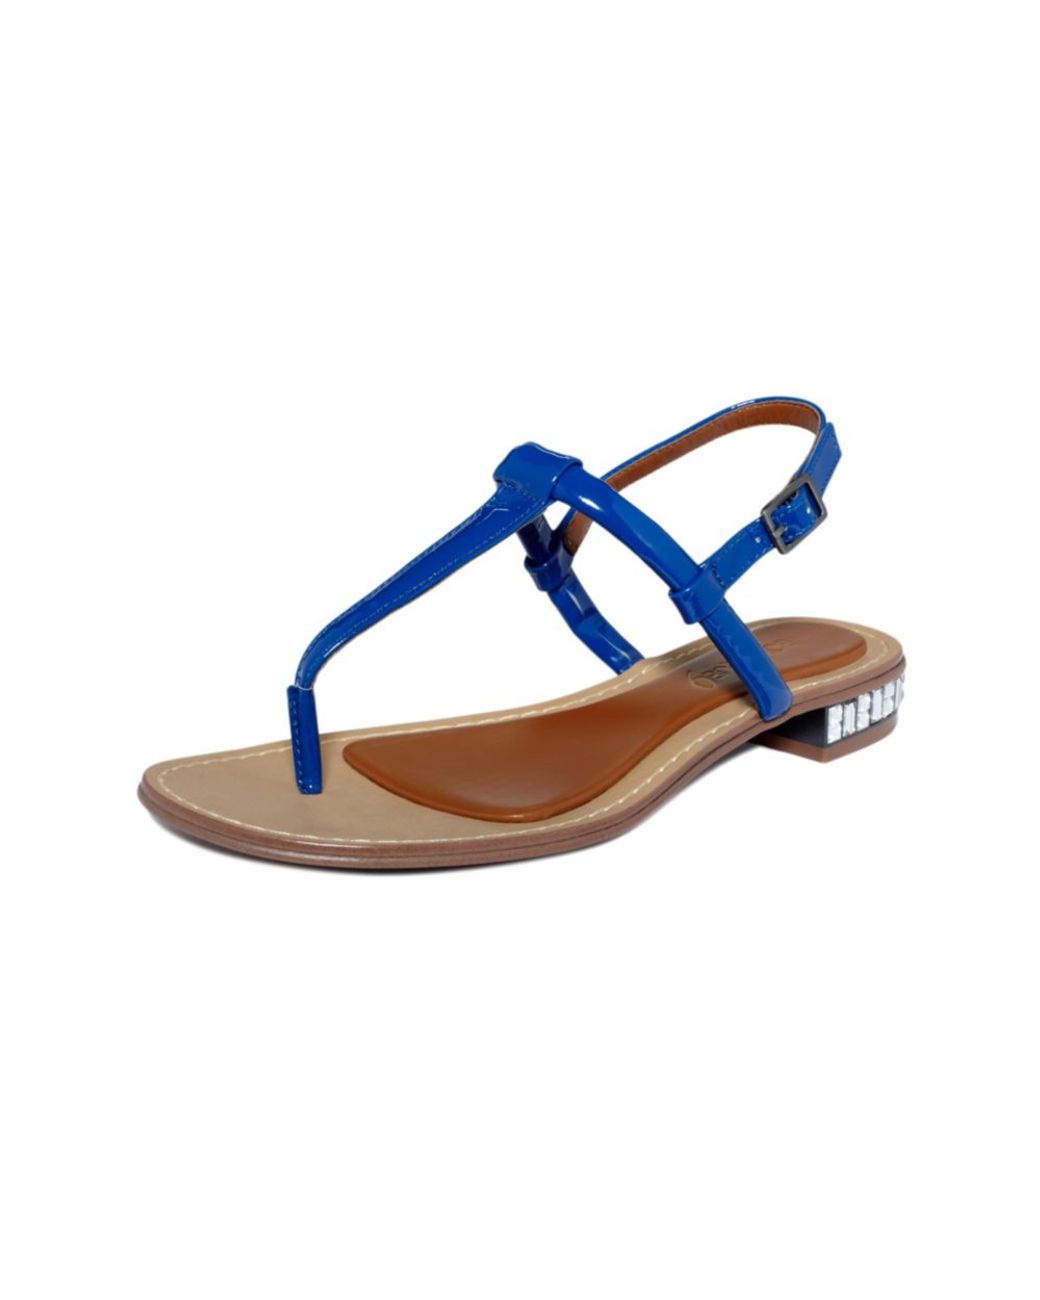 Boutique 9 Bluestreak Flat Sandals | Lyst